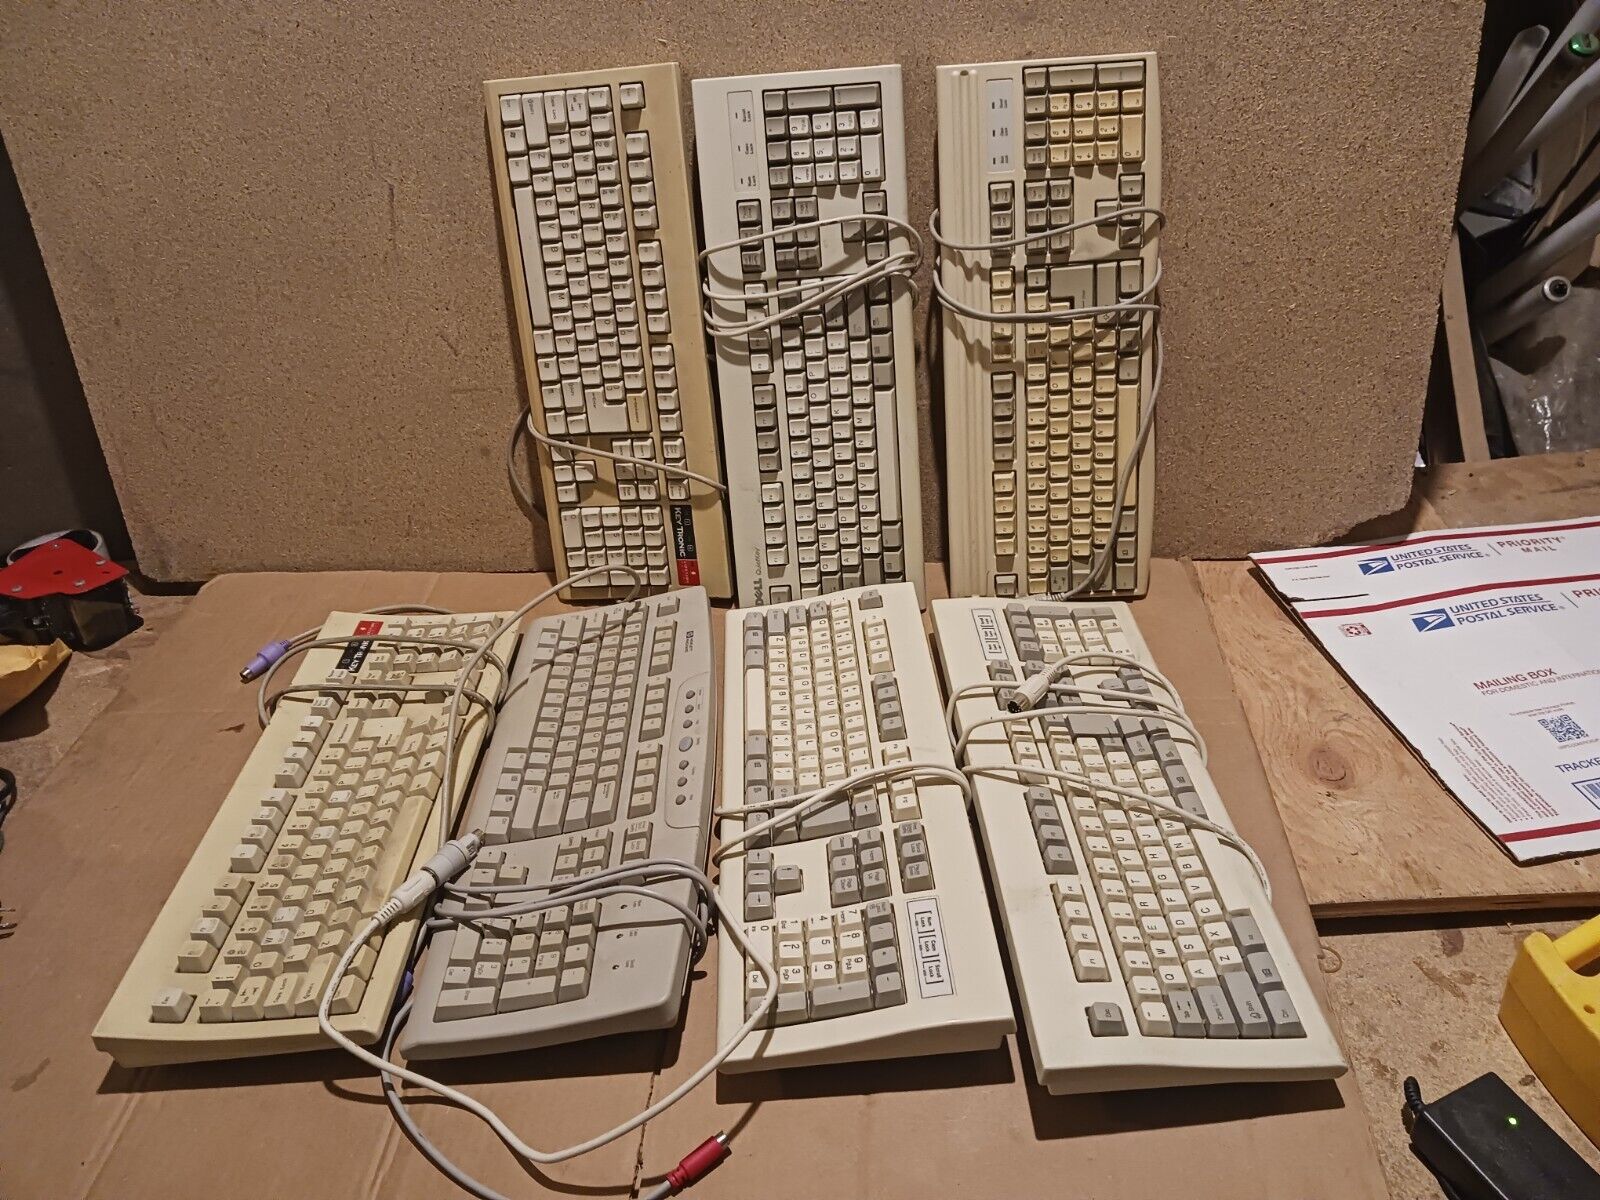 Lot of 7 Vintage Computer Desktop Keyboards Chicony KB-5911 Keytronic LT Classic